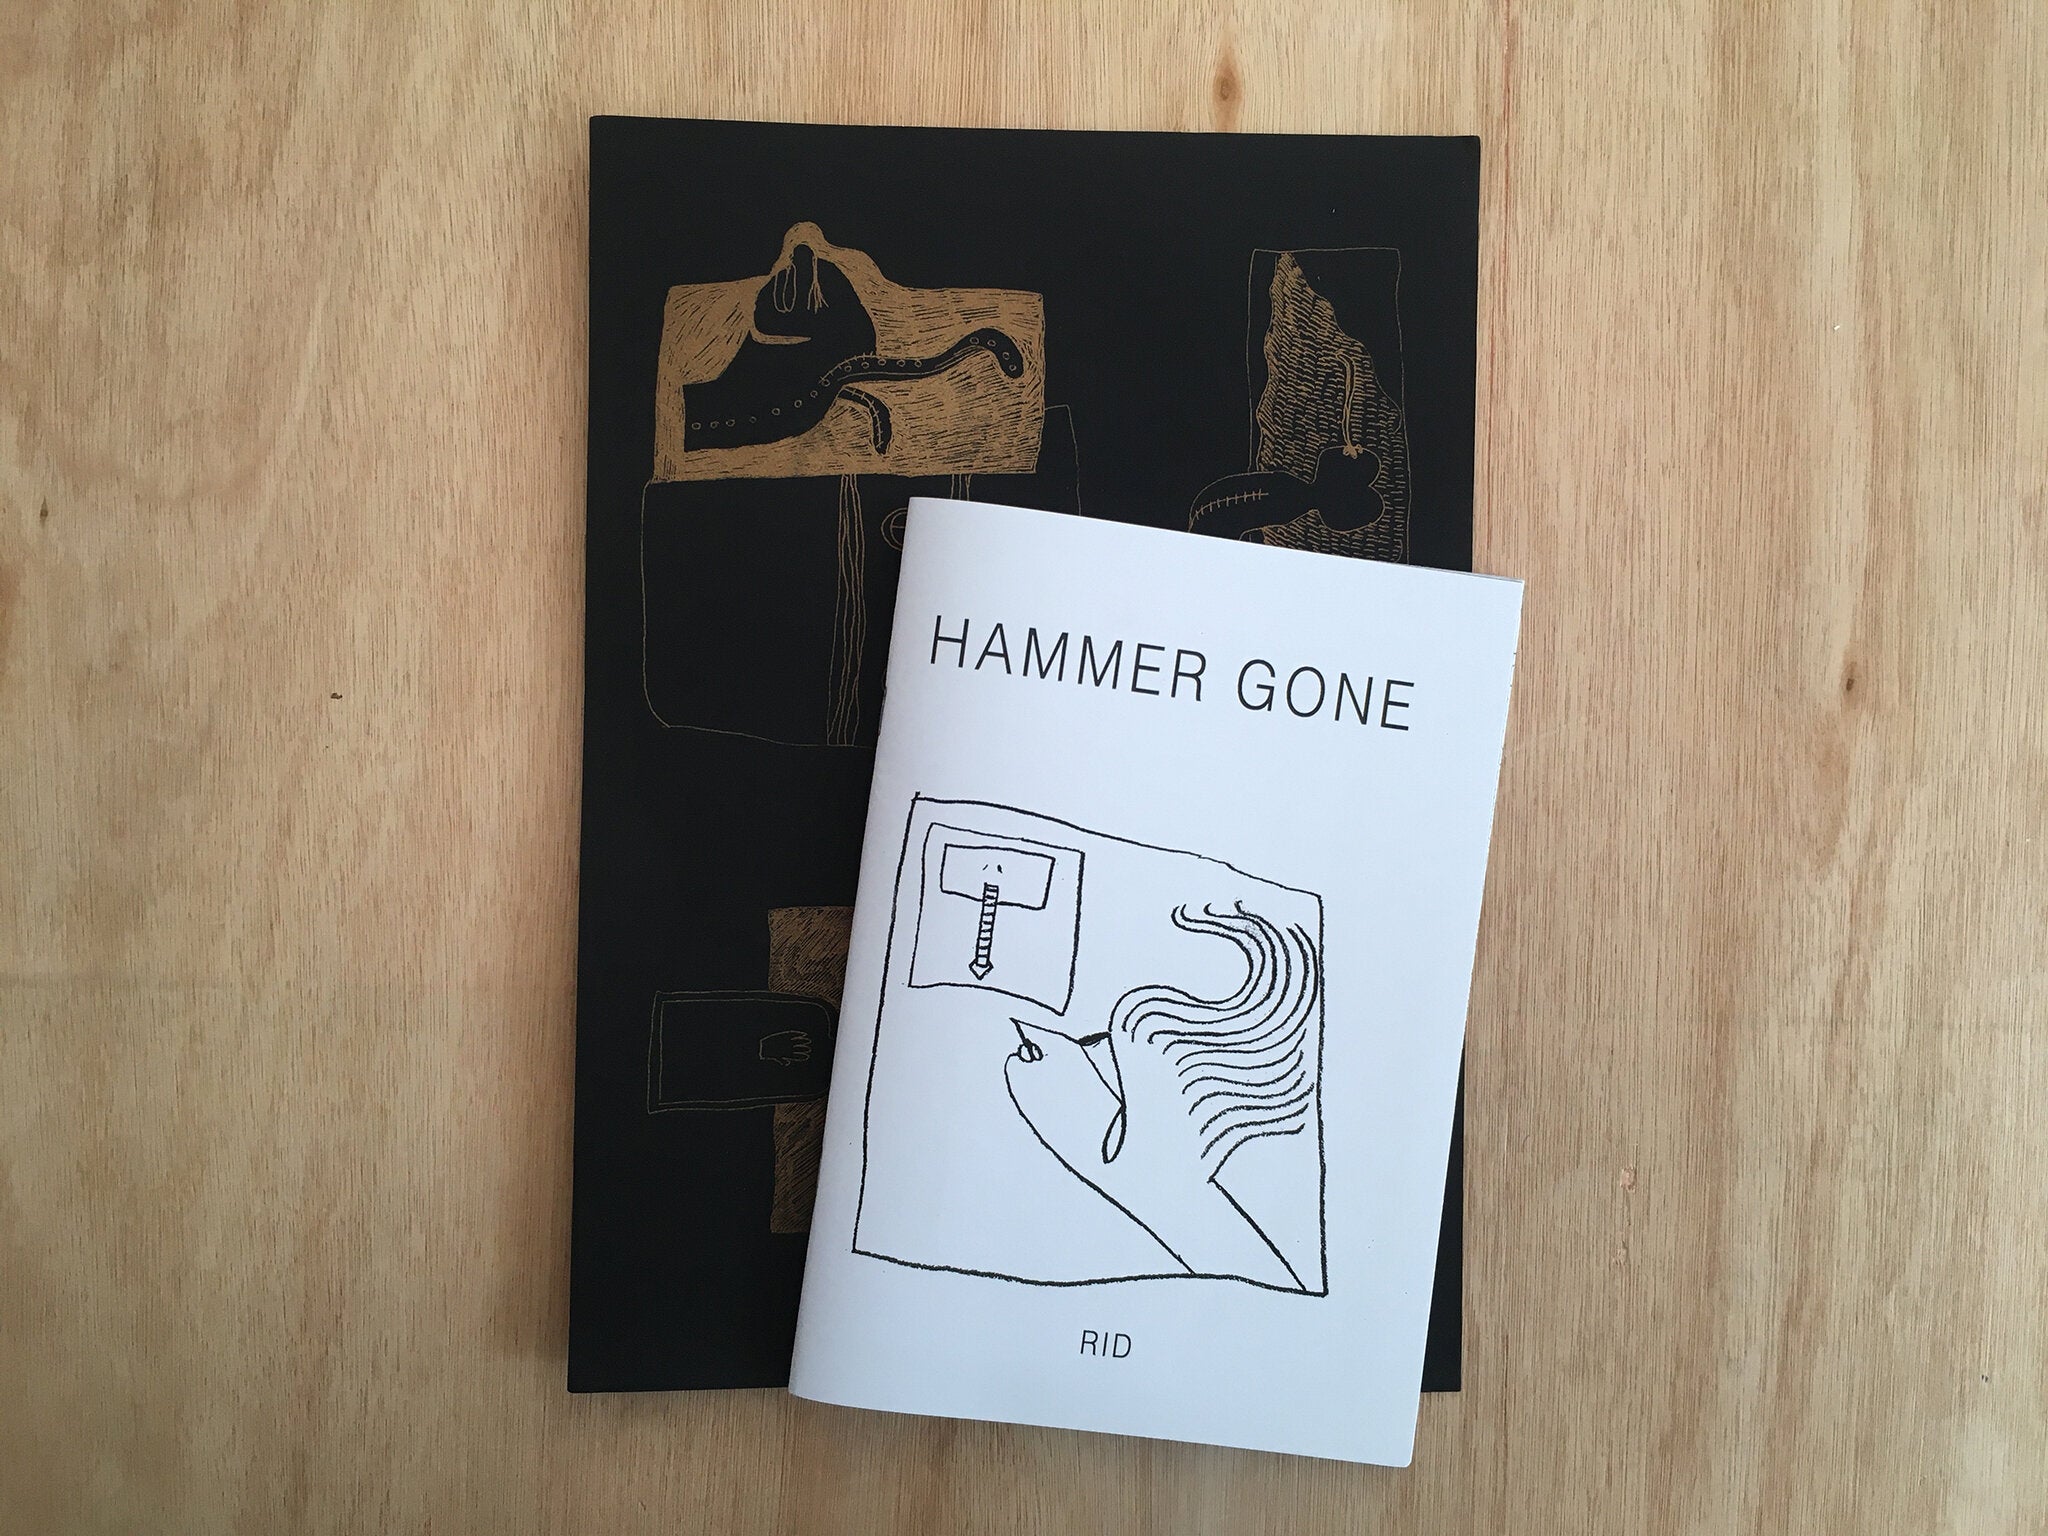 Hammer Gone by Kieran Rid